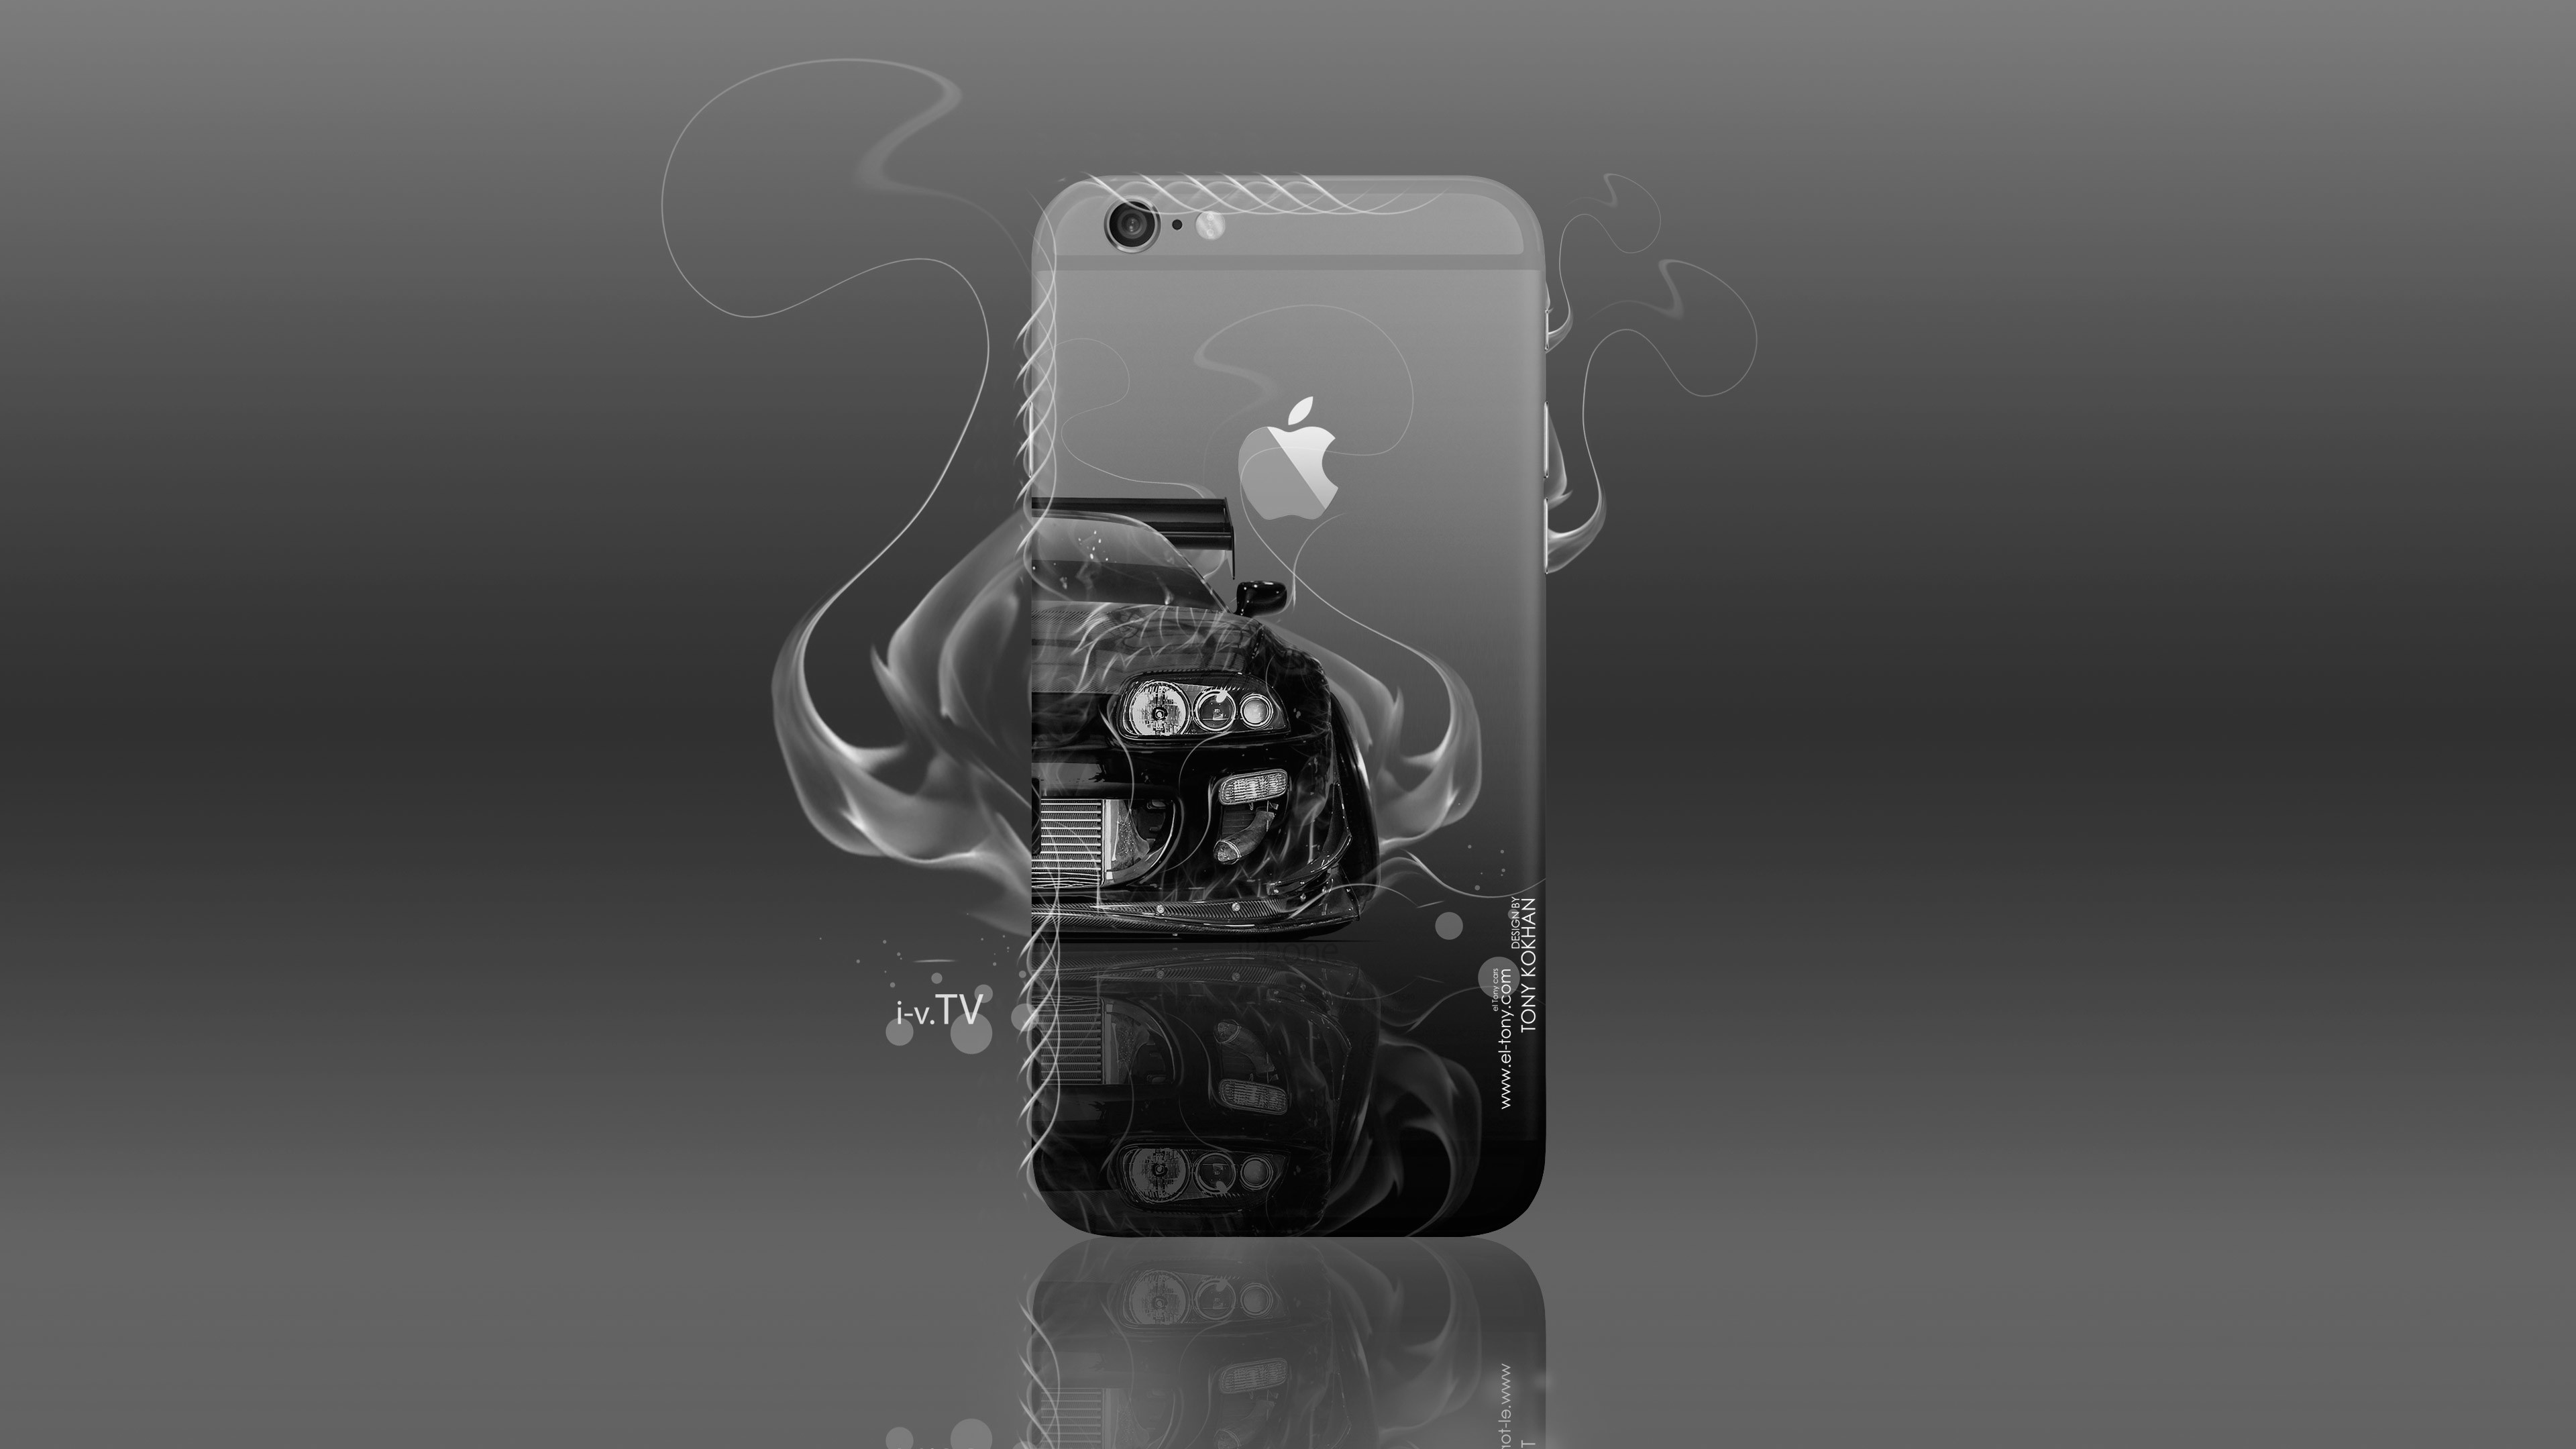 3840x2160 ... apple-iphone-6-plus-gadget-appletony-back-logo-